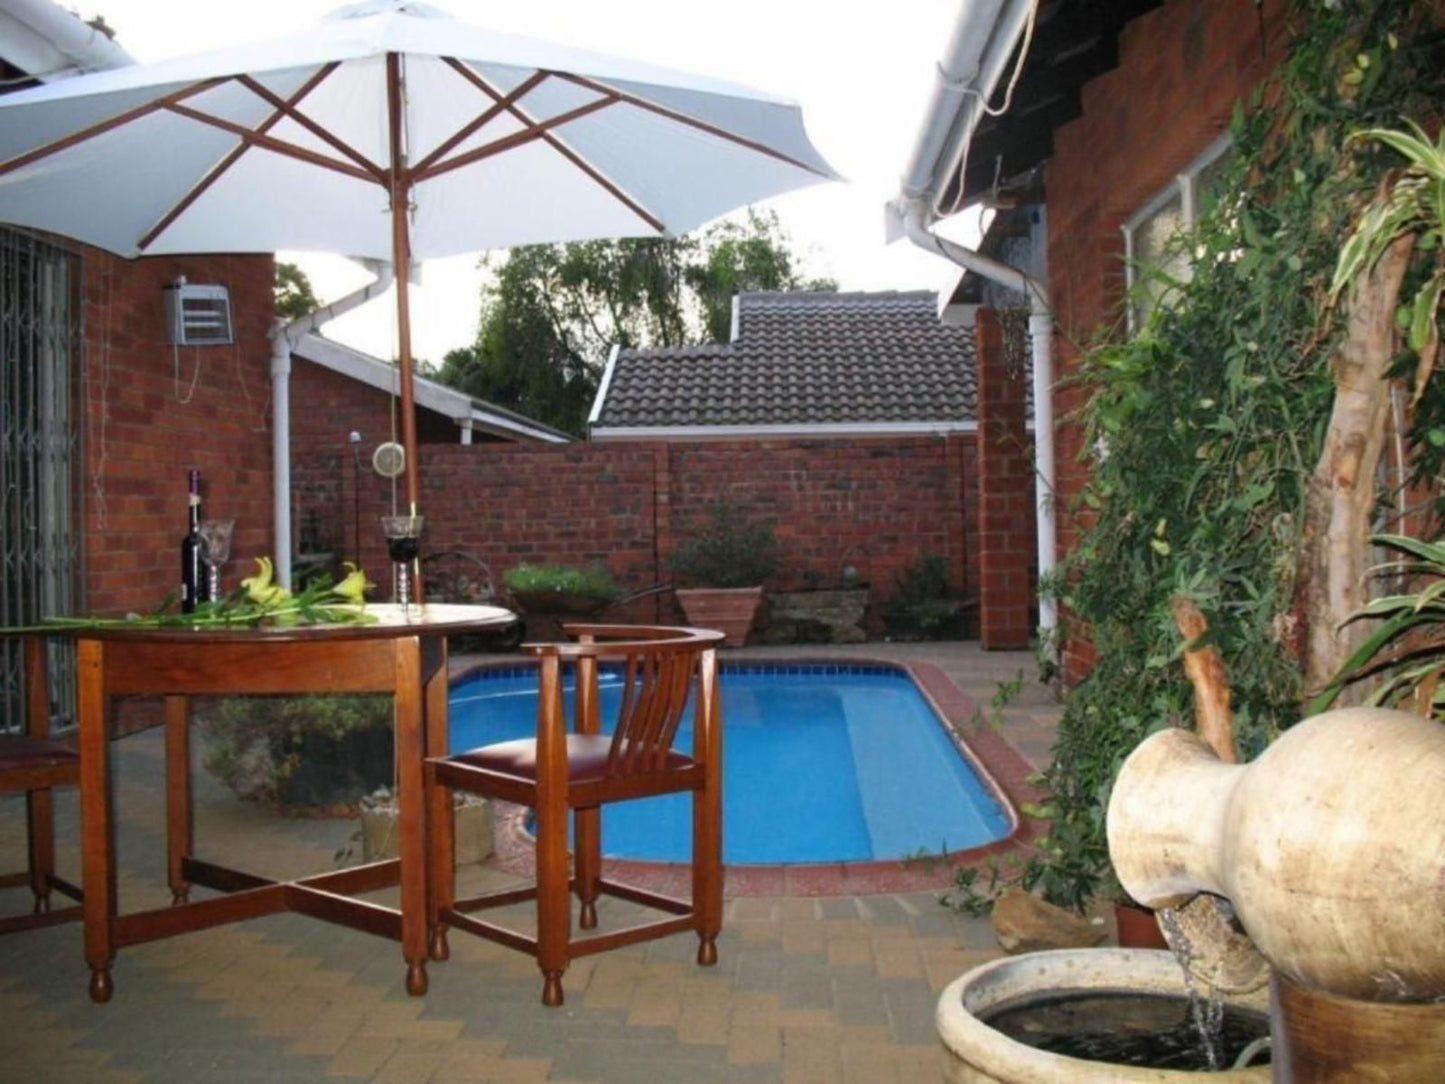 Memra Guest House Ladysmith Kwazulu Natal Kwazulu Natal South Africa Garden, Nature, Plant, Swimming Pool